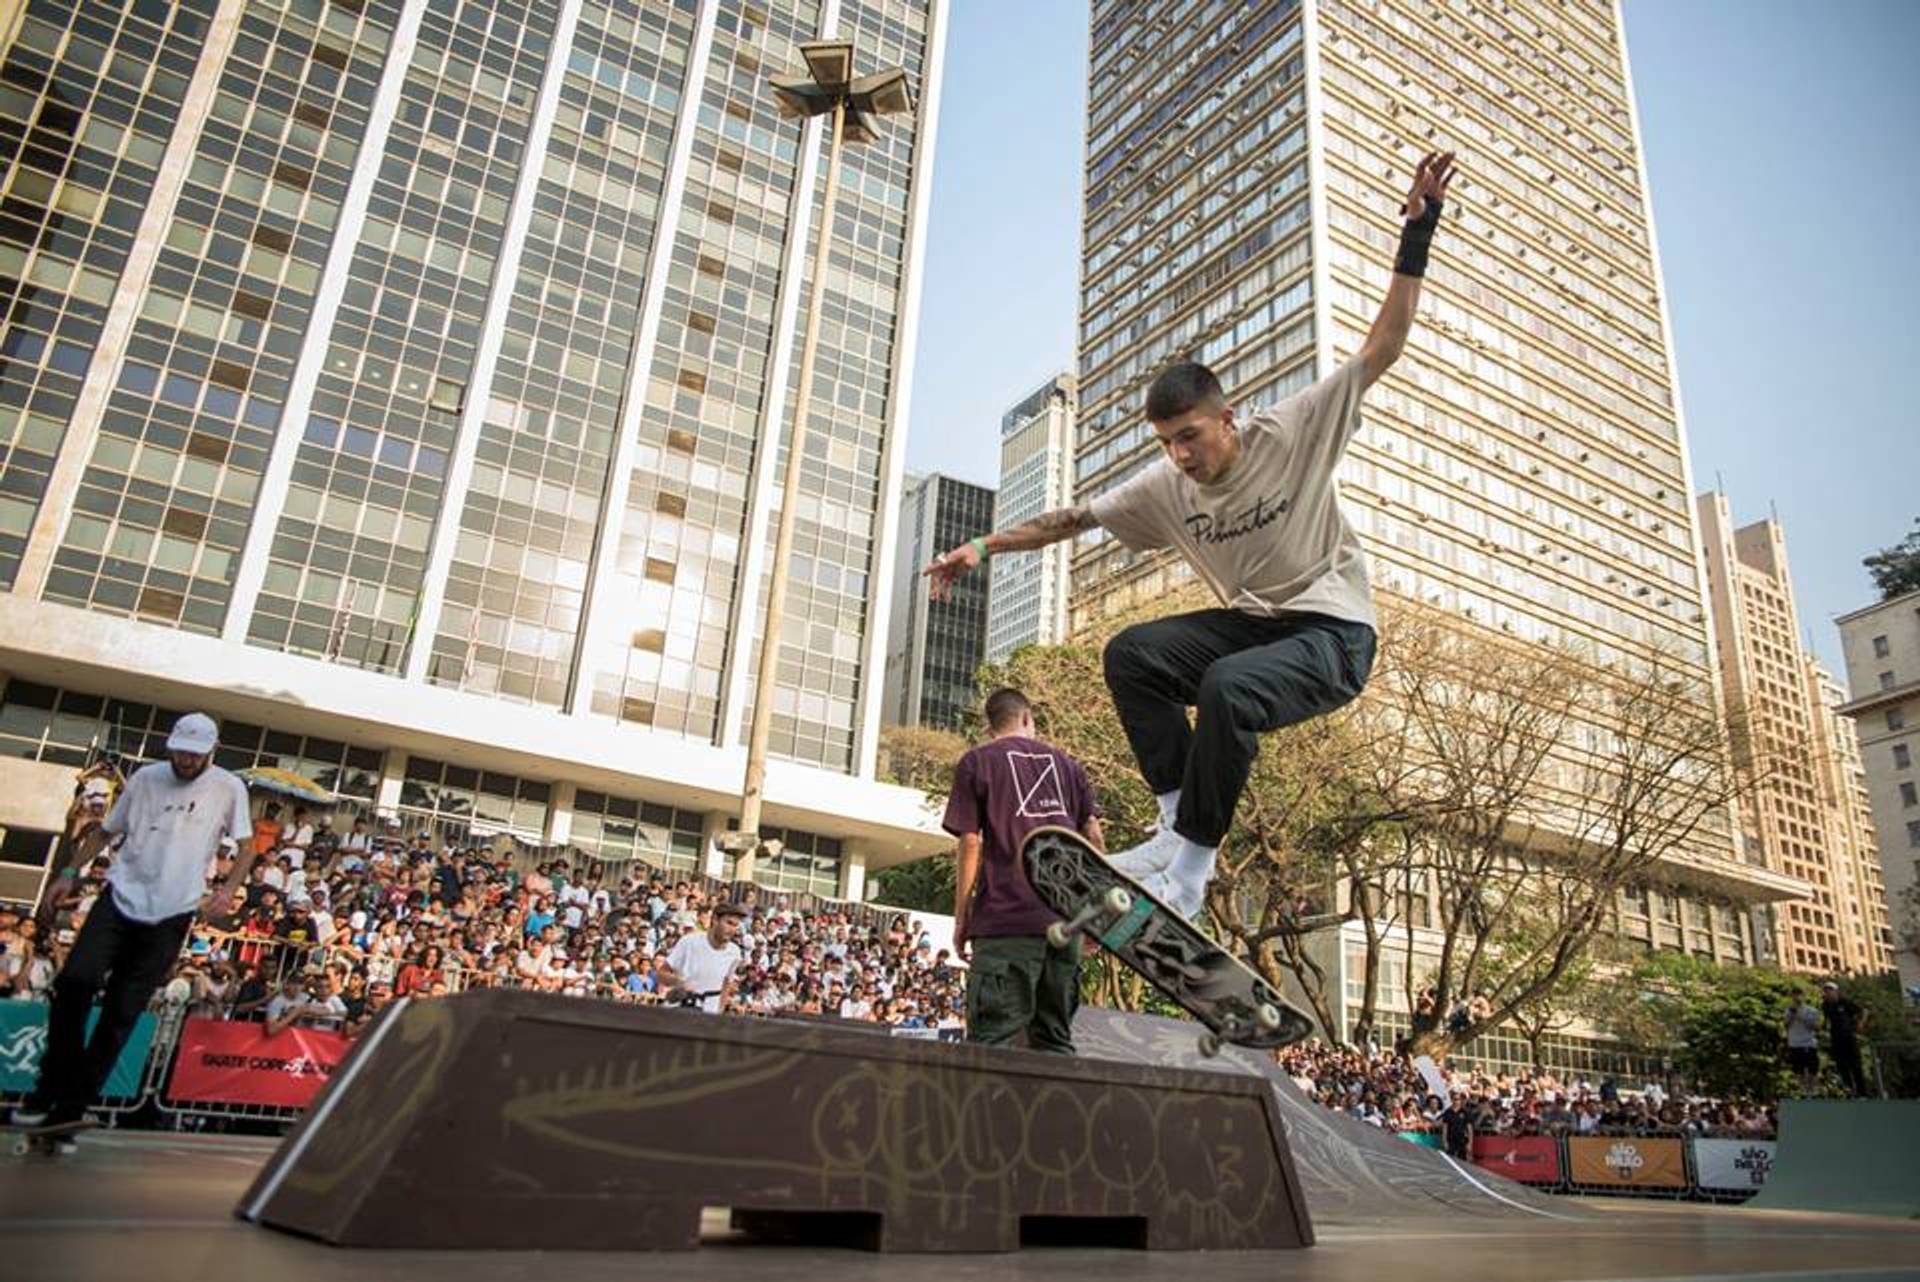 Adidas immerses itself in Shanghai's skater community